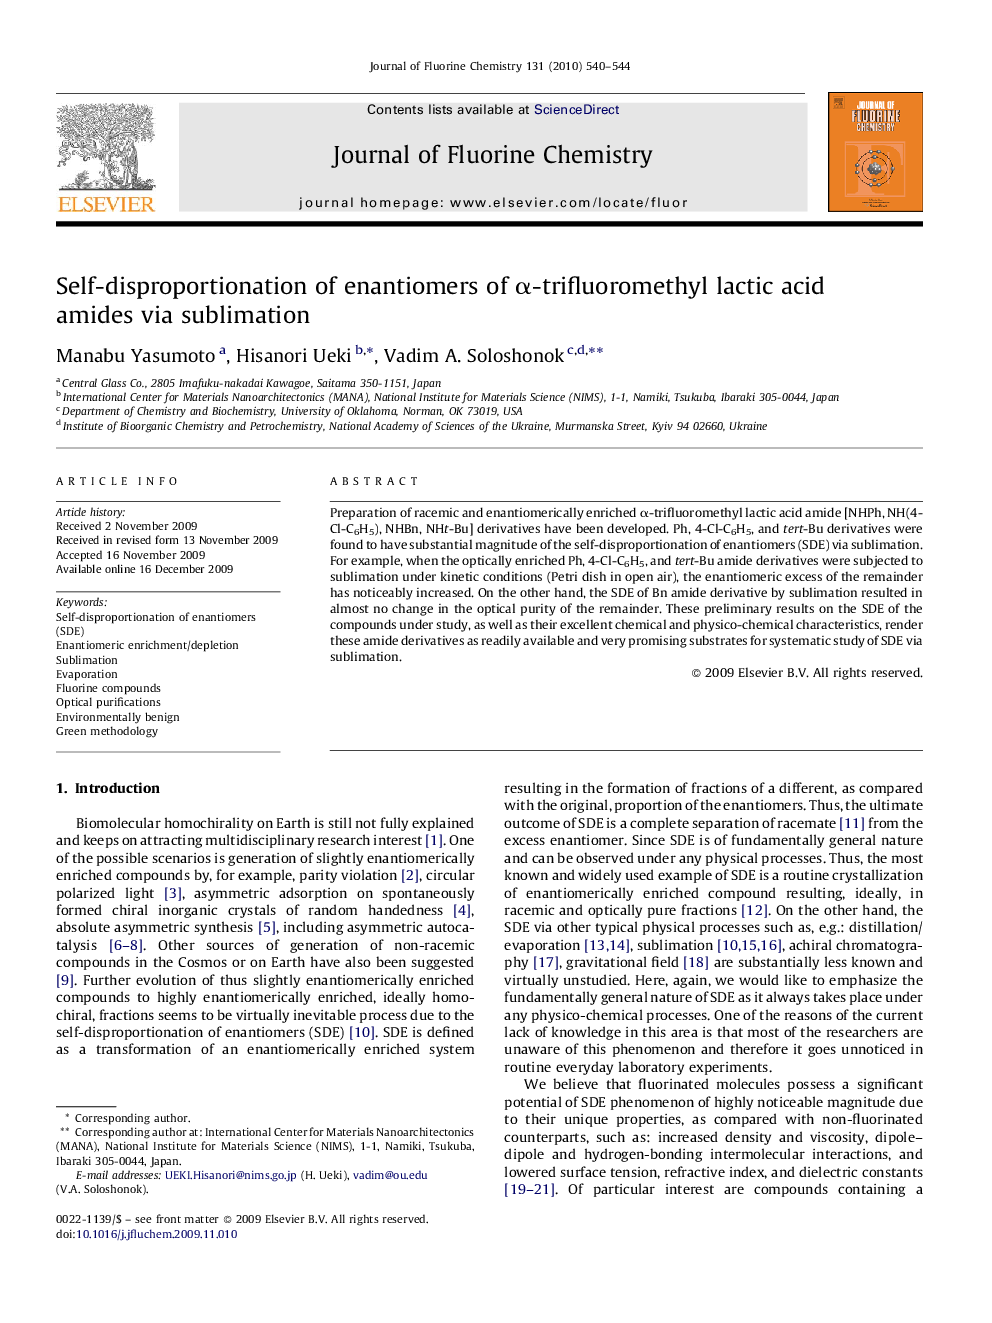 Self-disproportionation of enantiomers of α-trifluoromethyl lactic acid amides via sublimation